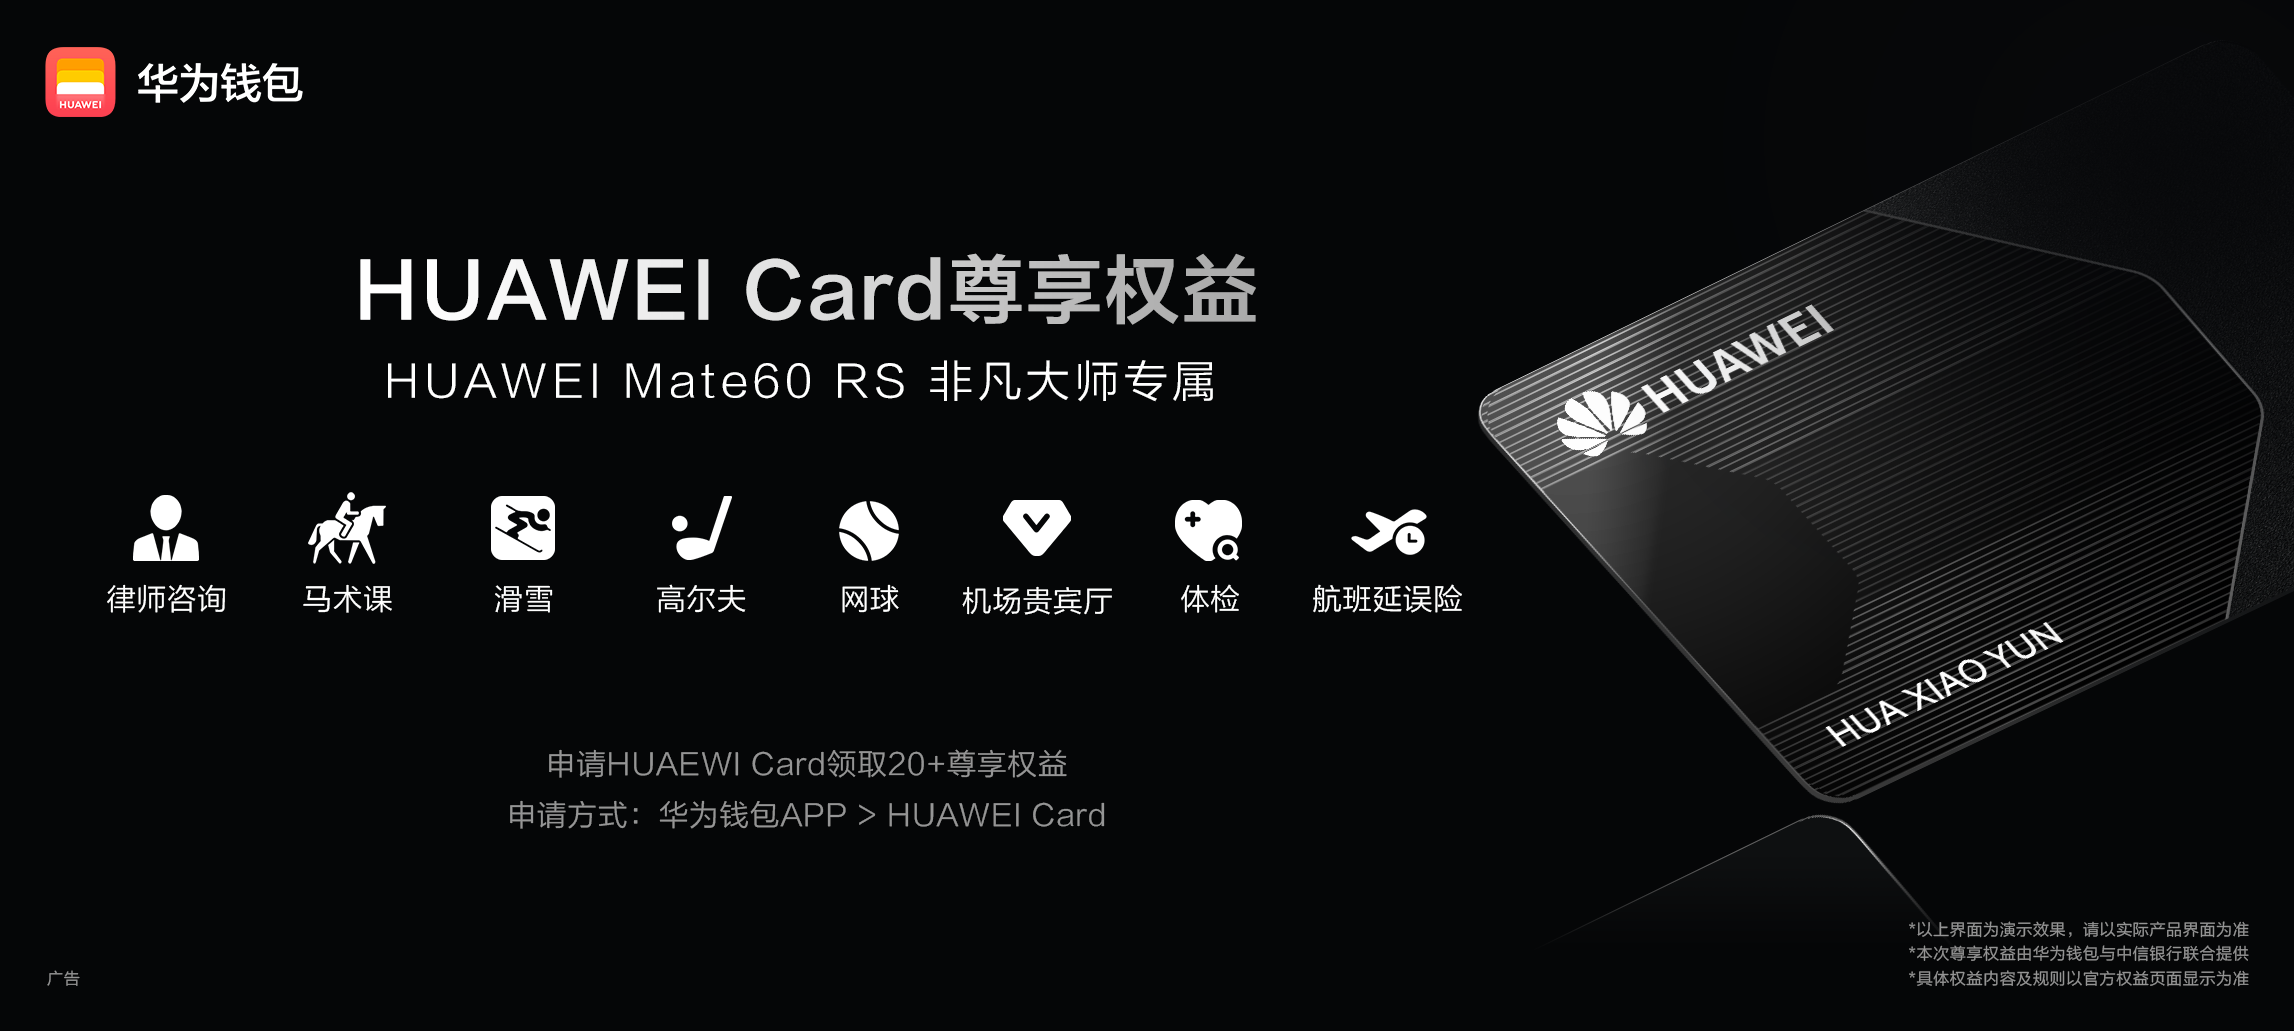 HUAWEI Card尊享权益 HUAWEI Mate 60 RS用户专享